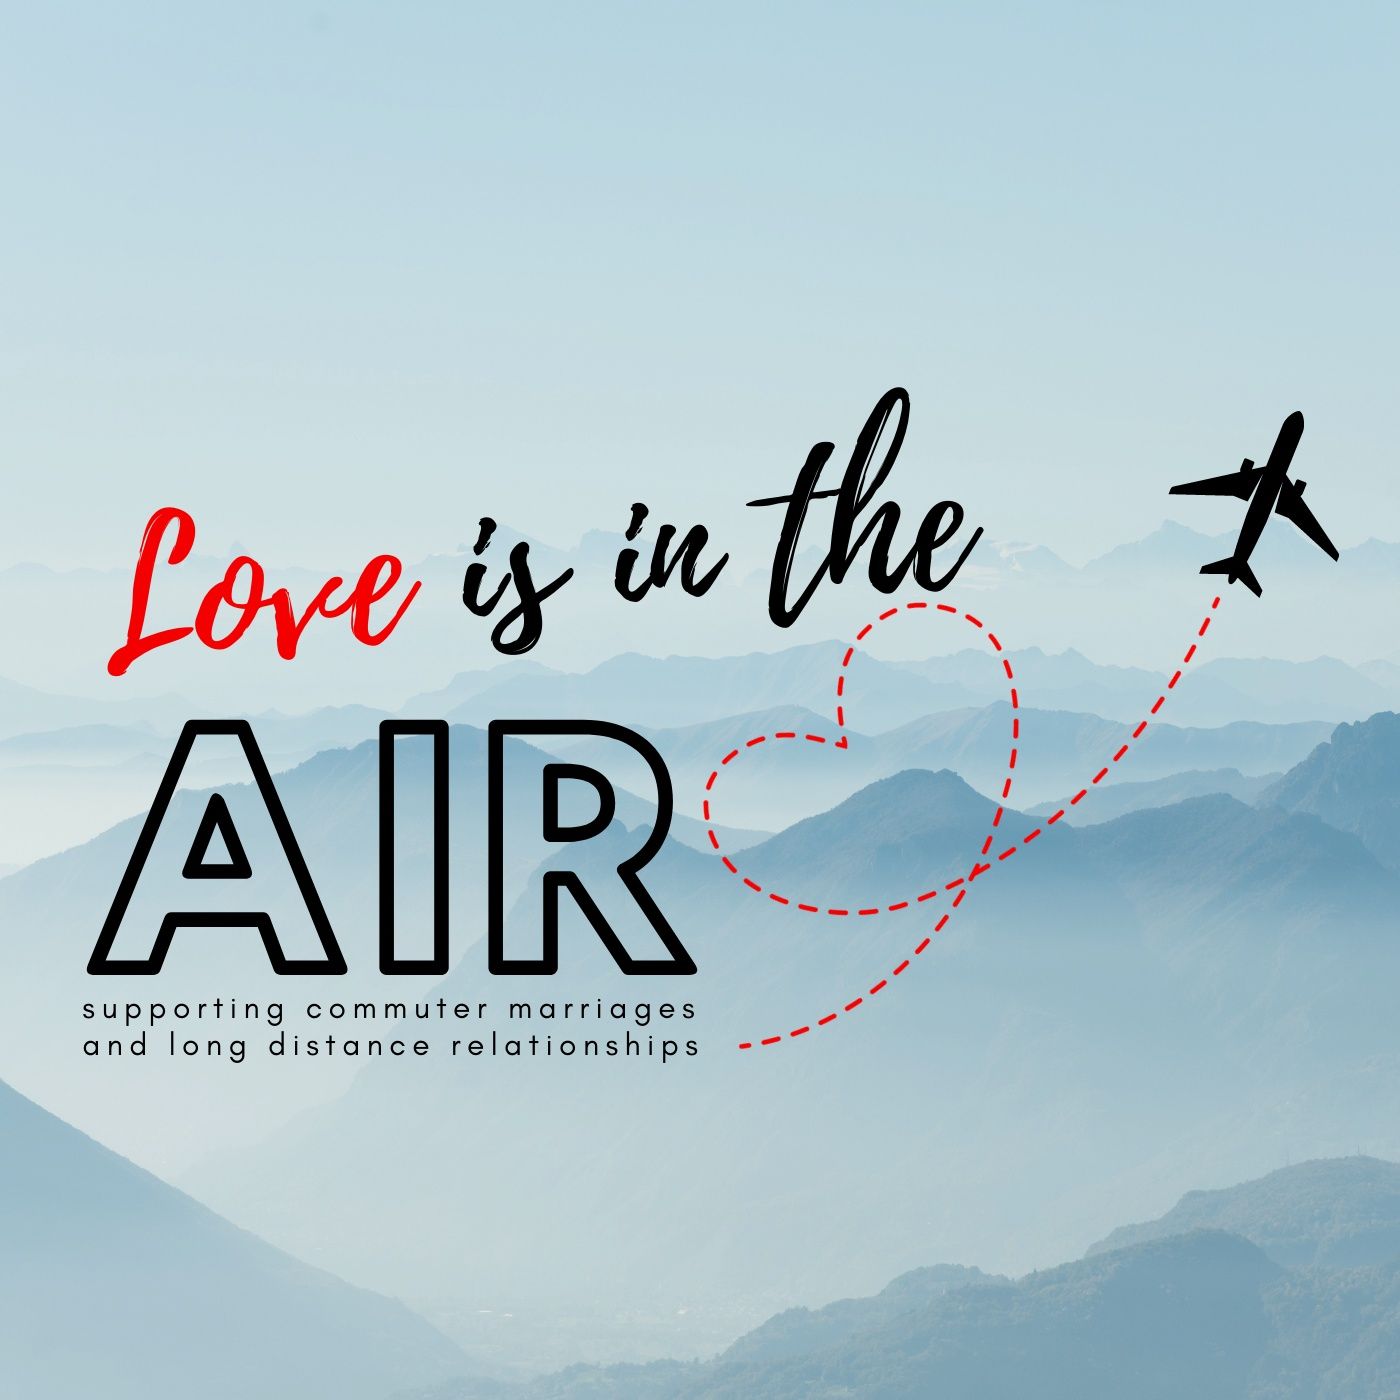 I love air. Love is in the Air. Air "Love 2, CD". Дщму шы шт еру ФШК the Air. Love is in the Air книга.